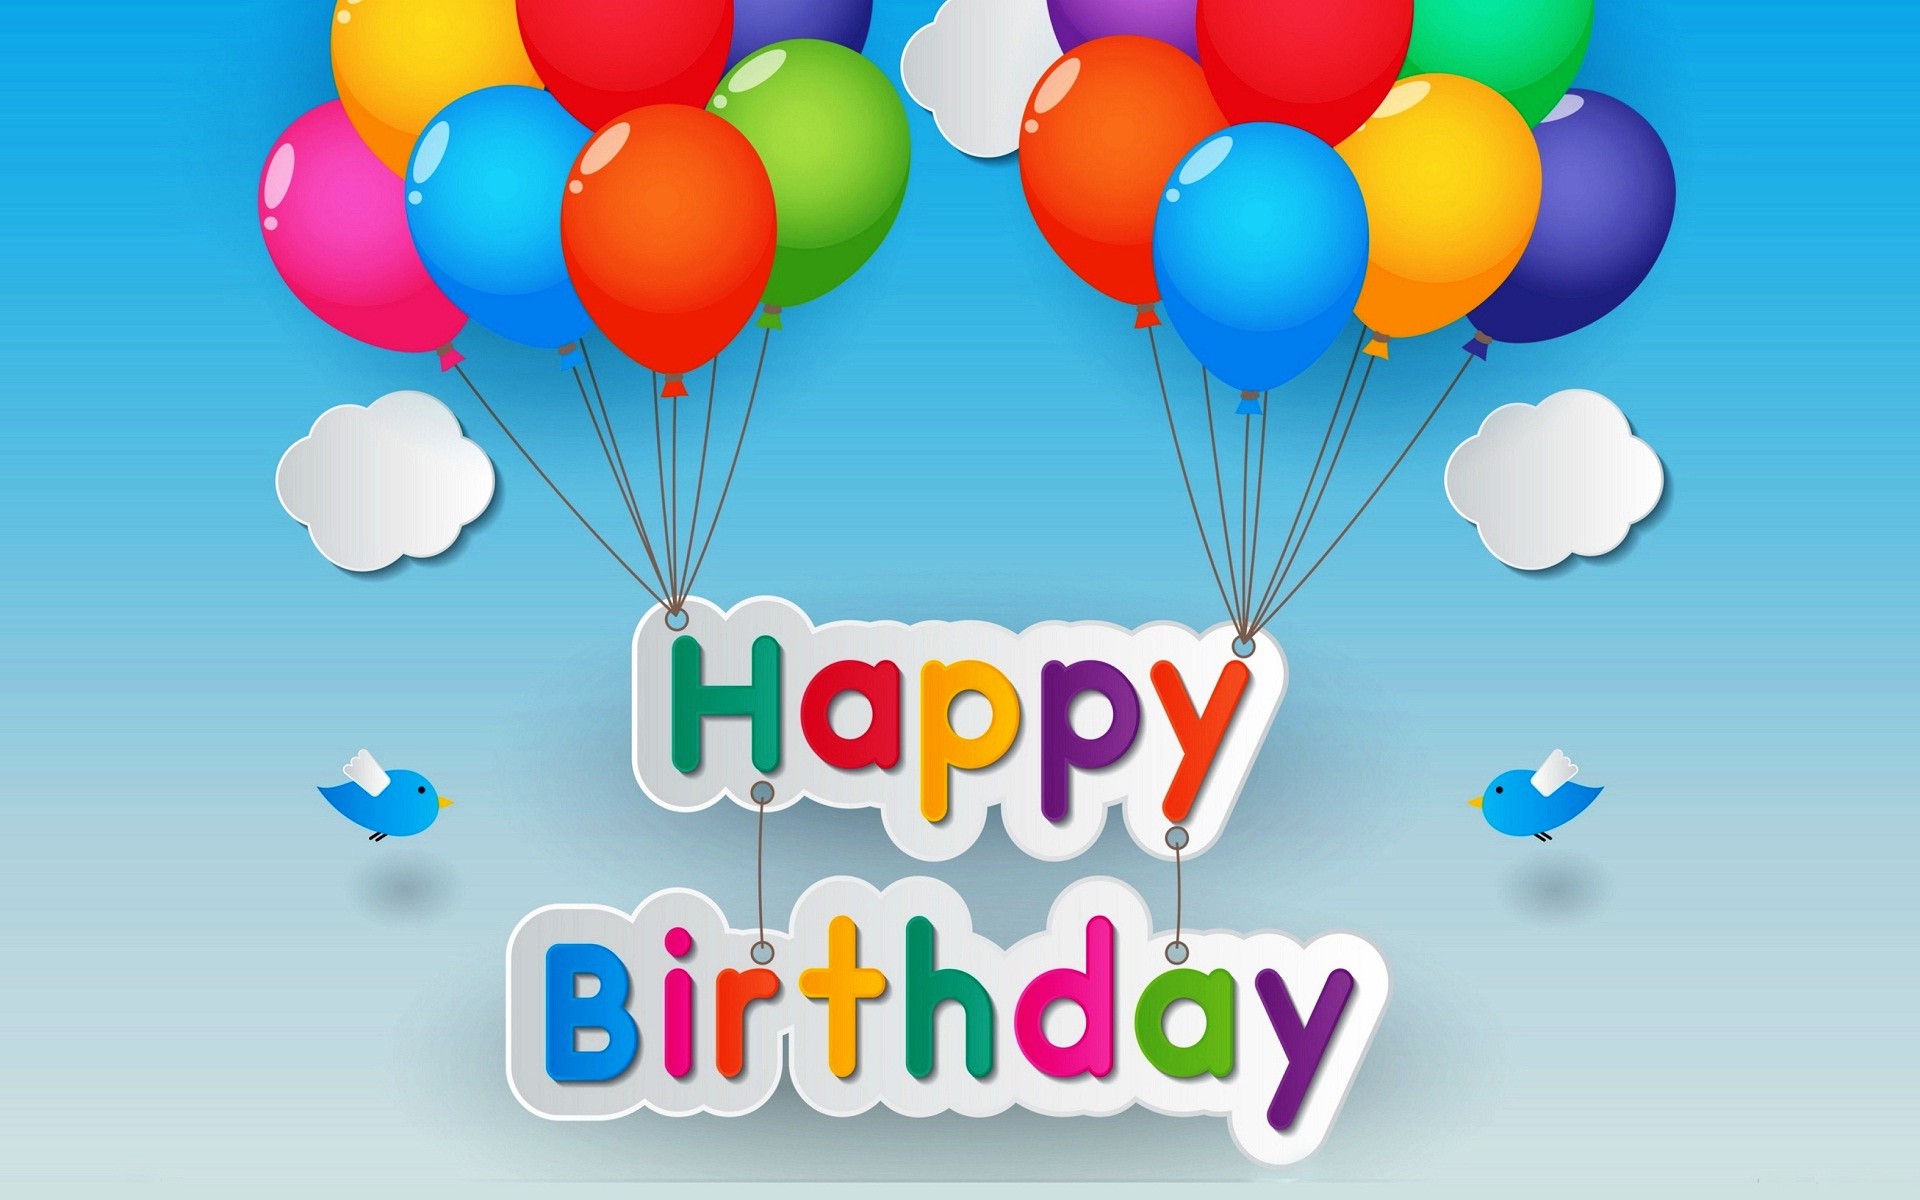 happy birthday funny wallpaper,balloon,hot air ballooning,text,party supply,font